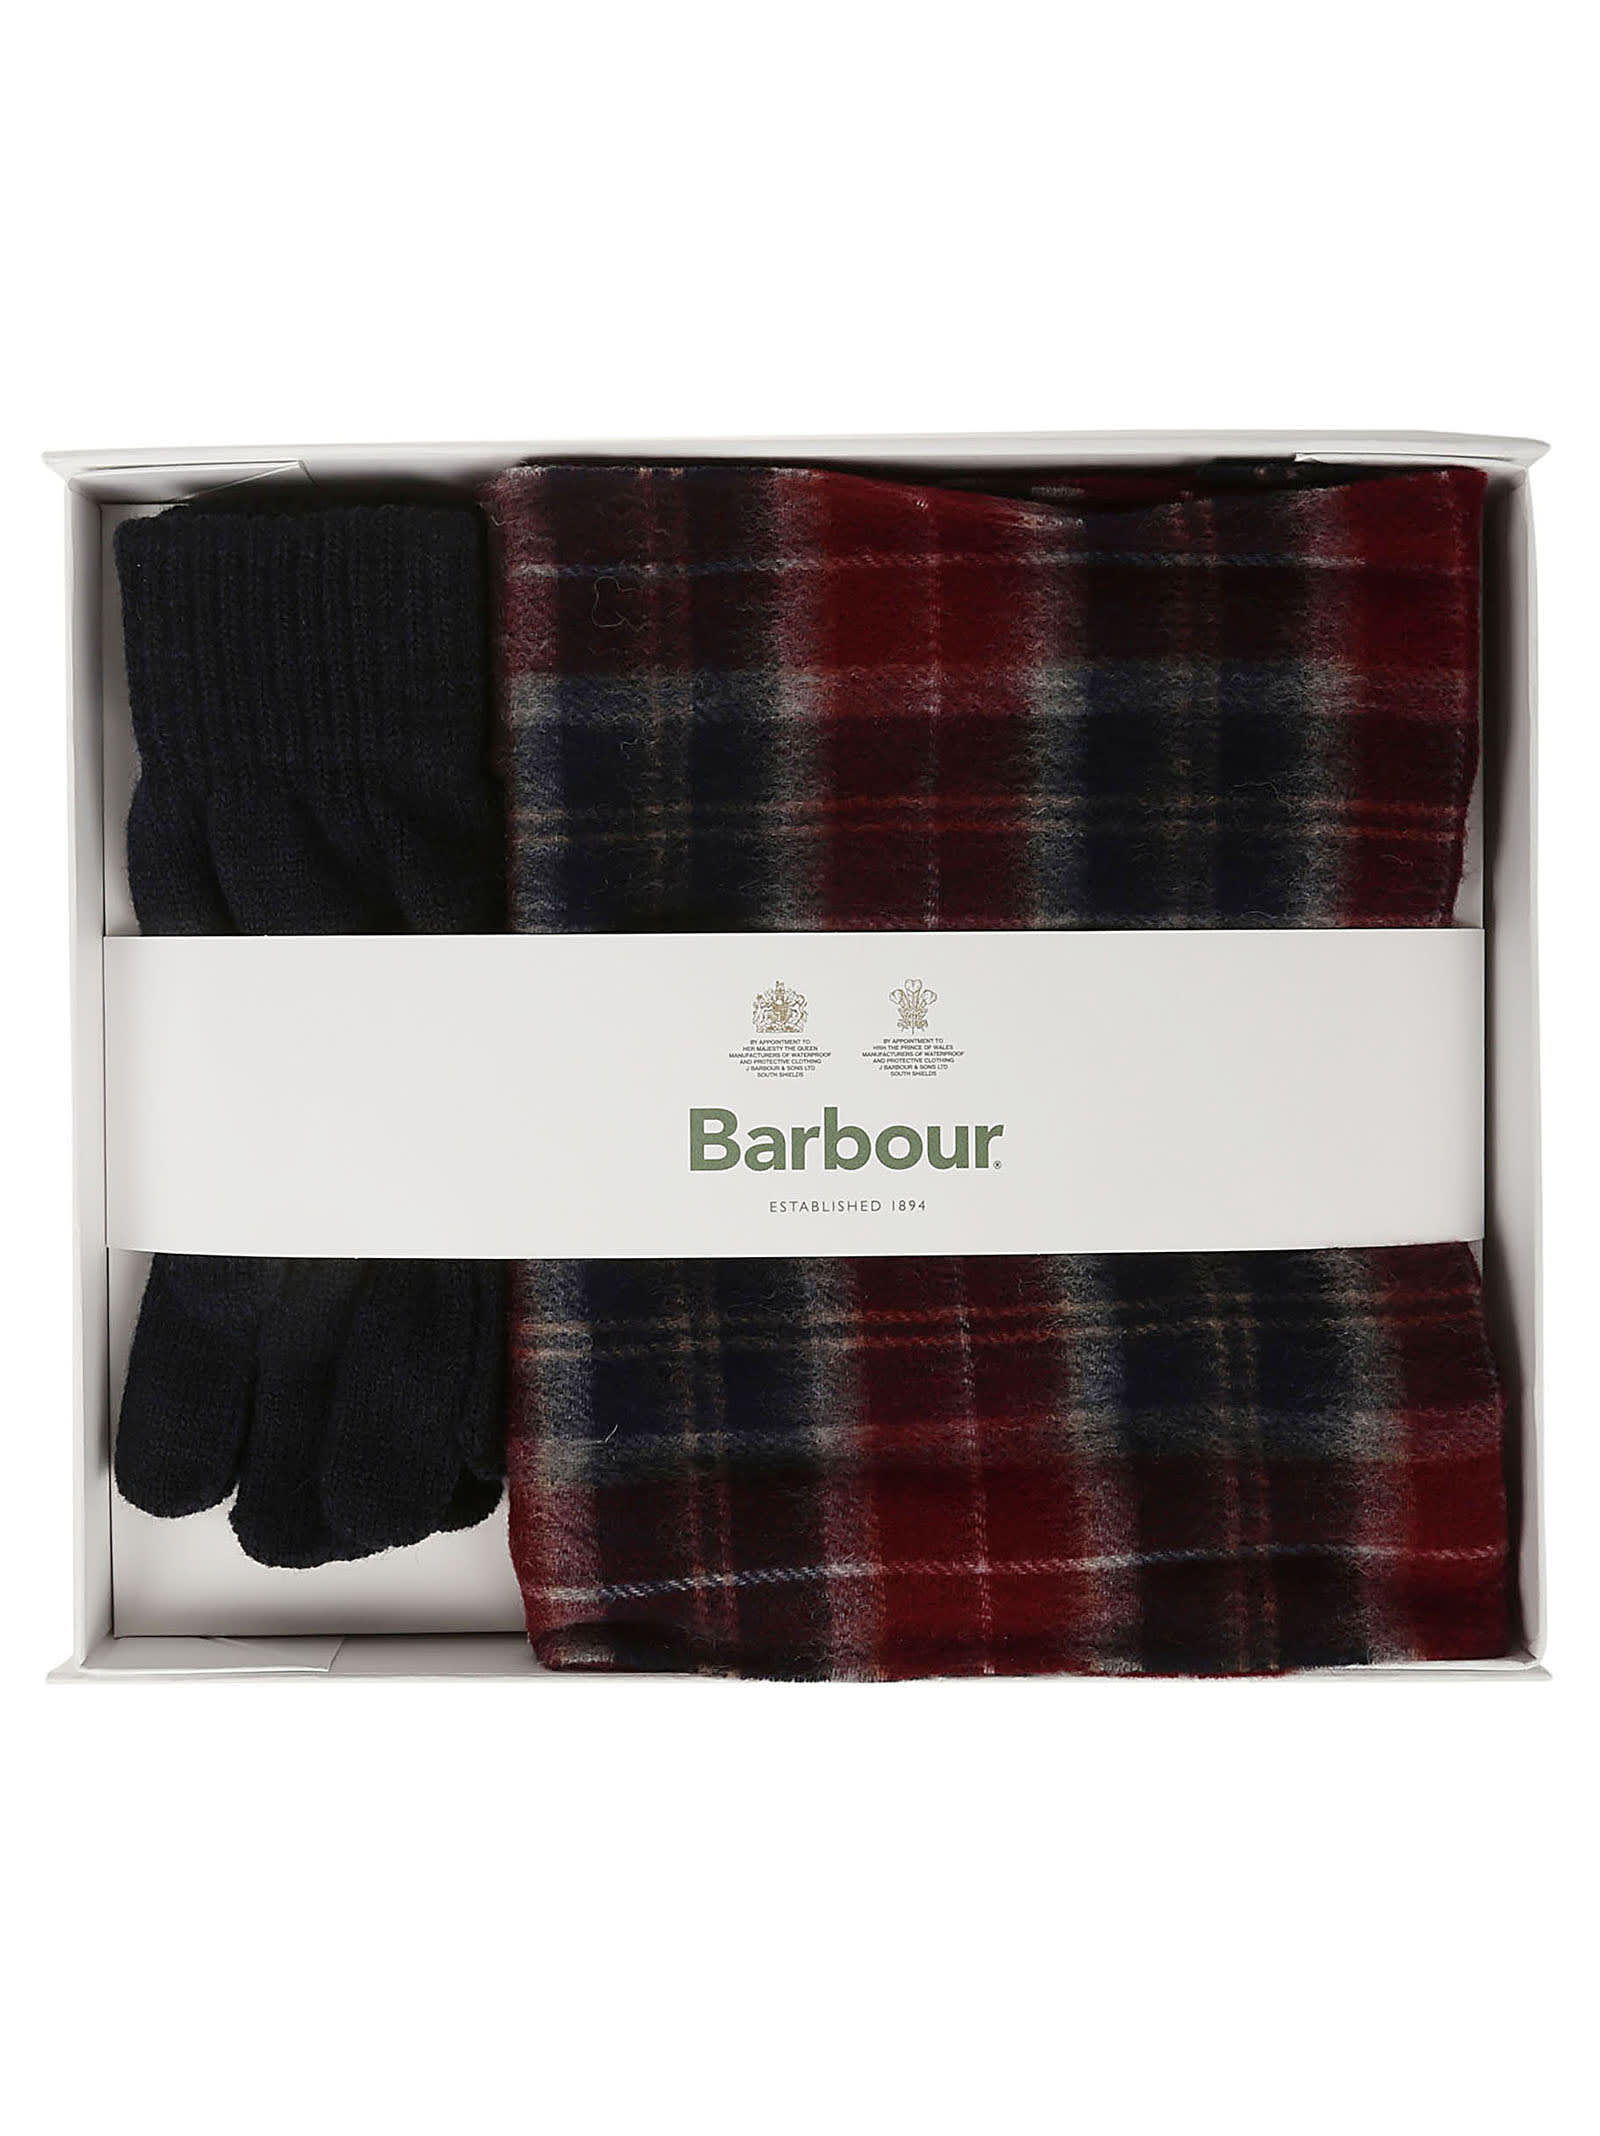 Barbour Tartan Scarf Glove Gift Set In Cranberry